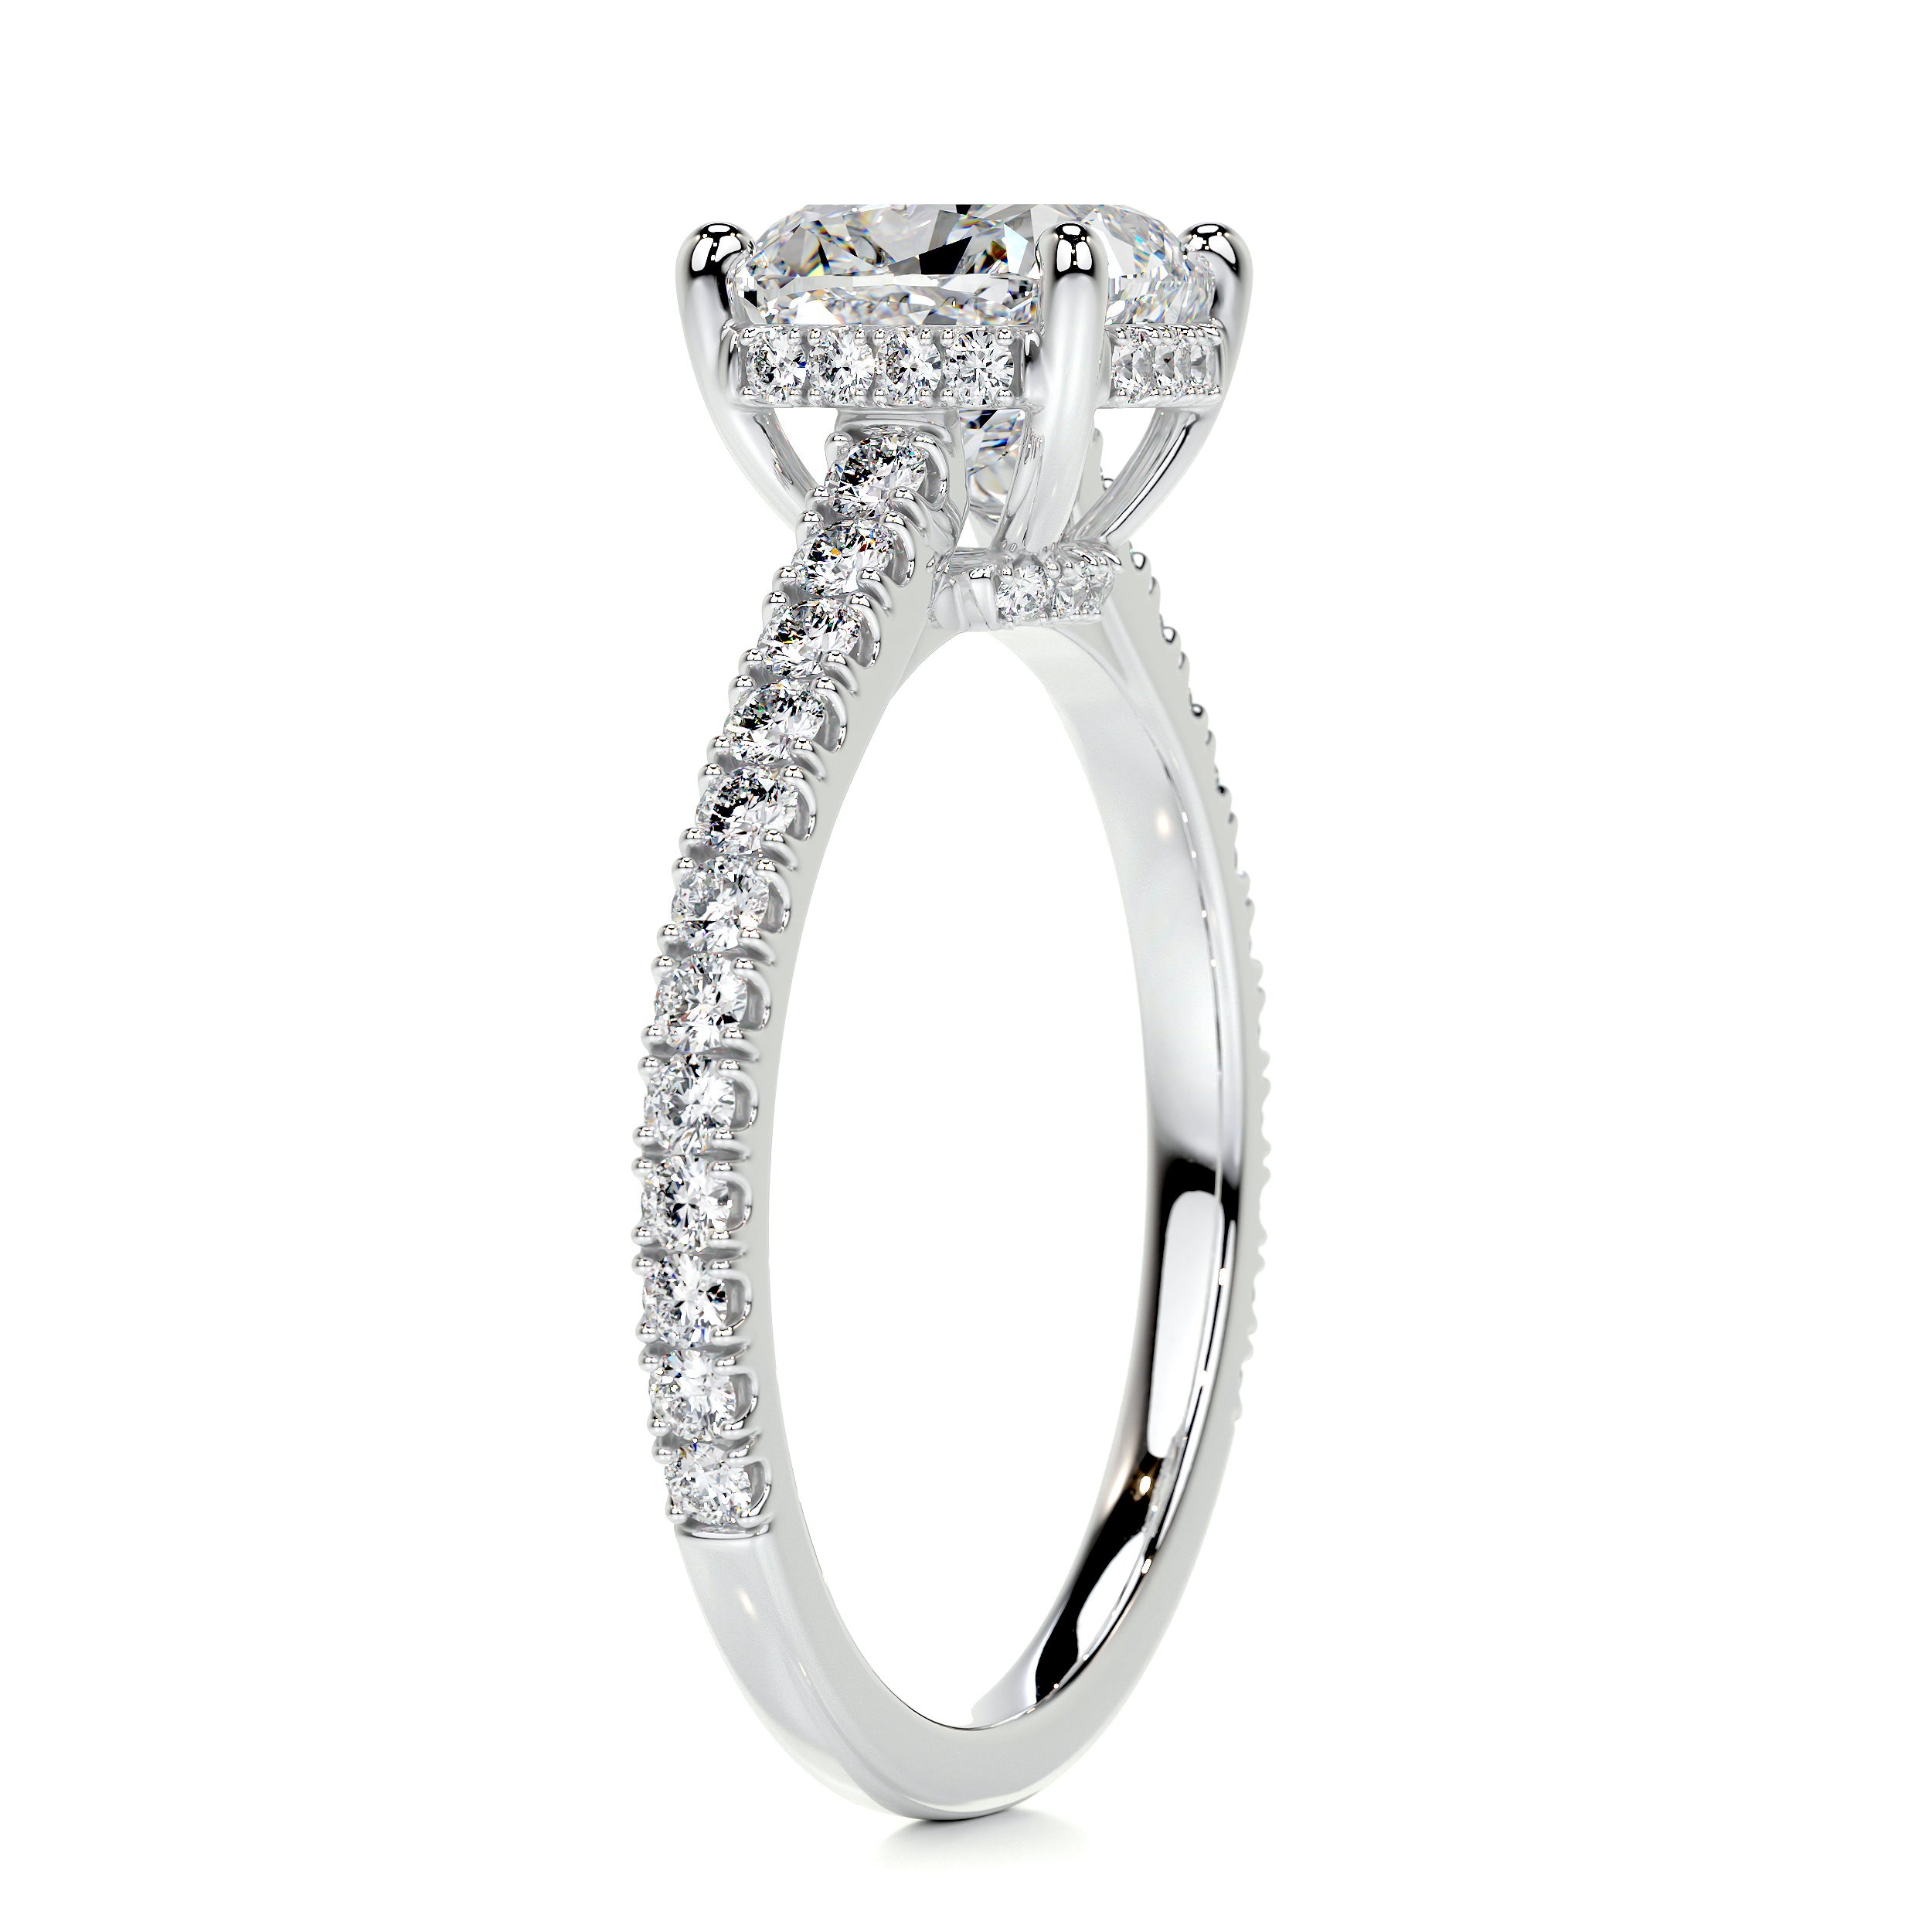 Cassandra Diamond Engagement Ring   (2 Carat) -Platinum